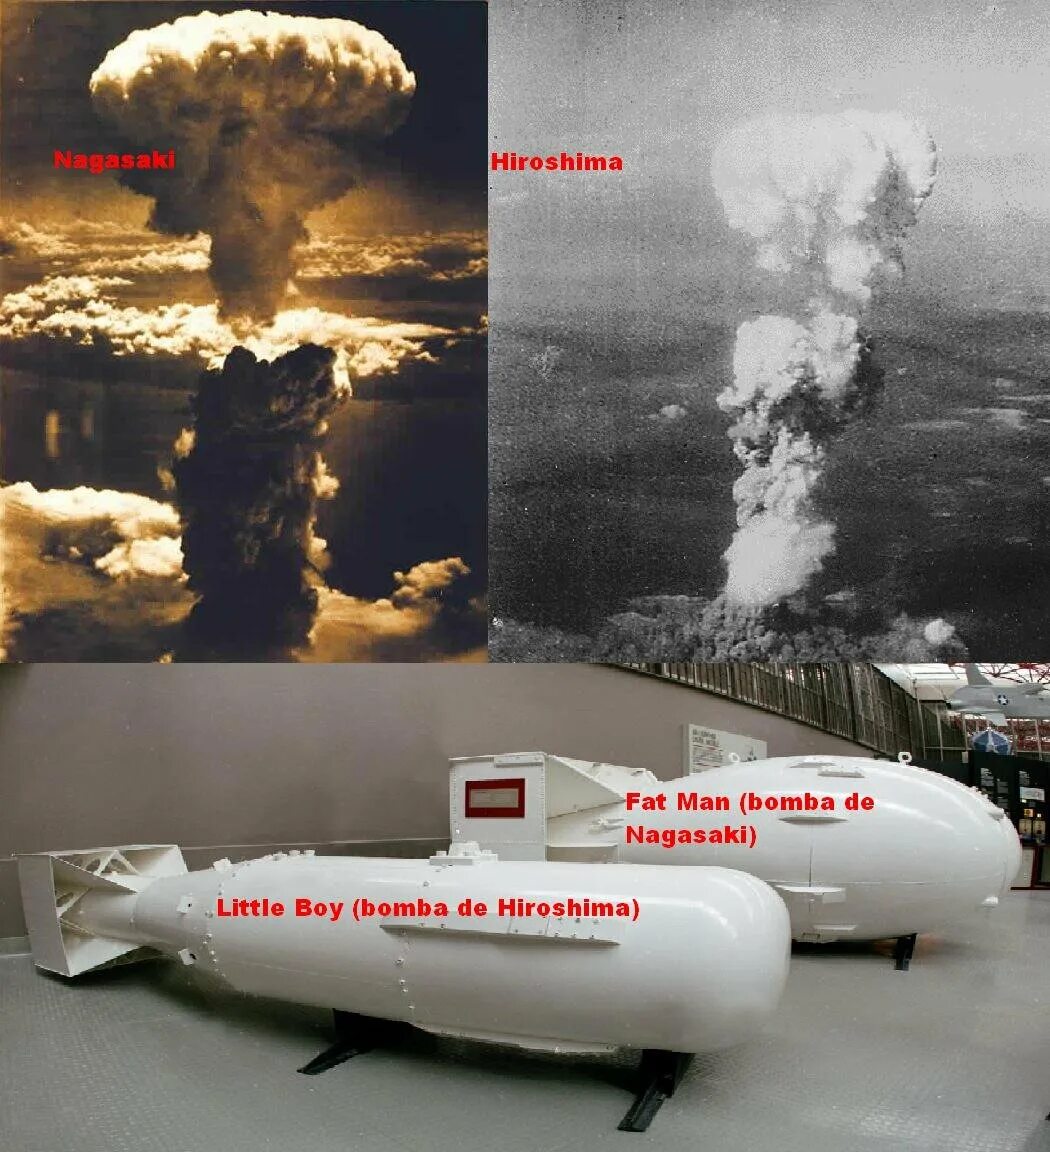 Название ядерного оружия сша. Хиросима и Нагасаки атомная бомба. Нагасаки и Хиросима США атамнойьомба. Ядерное оружие США Хиросима Нагасаки. Япония 1945 Хиросима и Нагасаки.